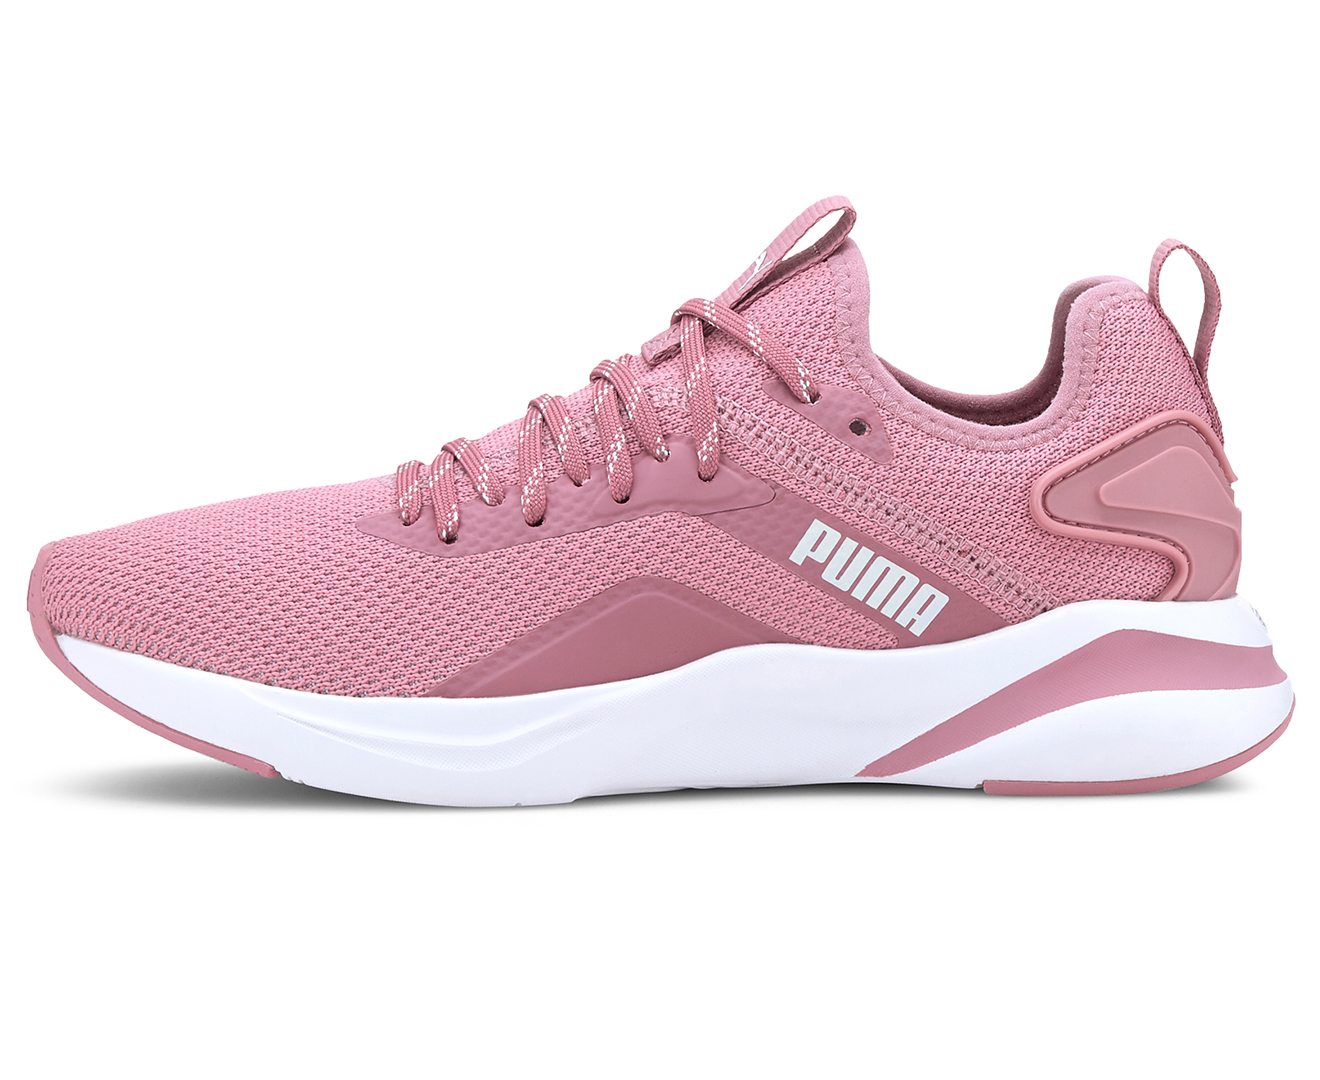 Puma Women's Softride Rift Slip On Sneakers - Foxglove/Puma White ...